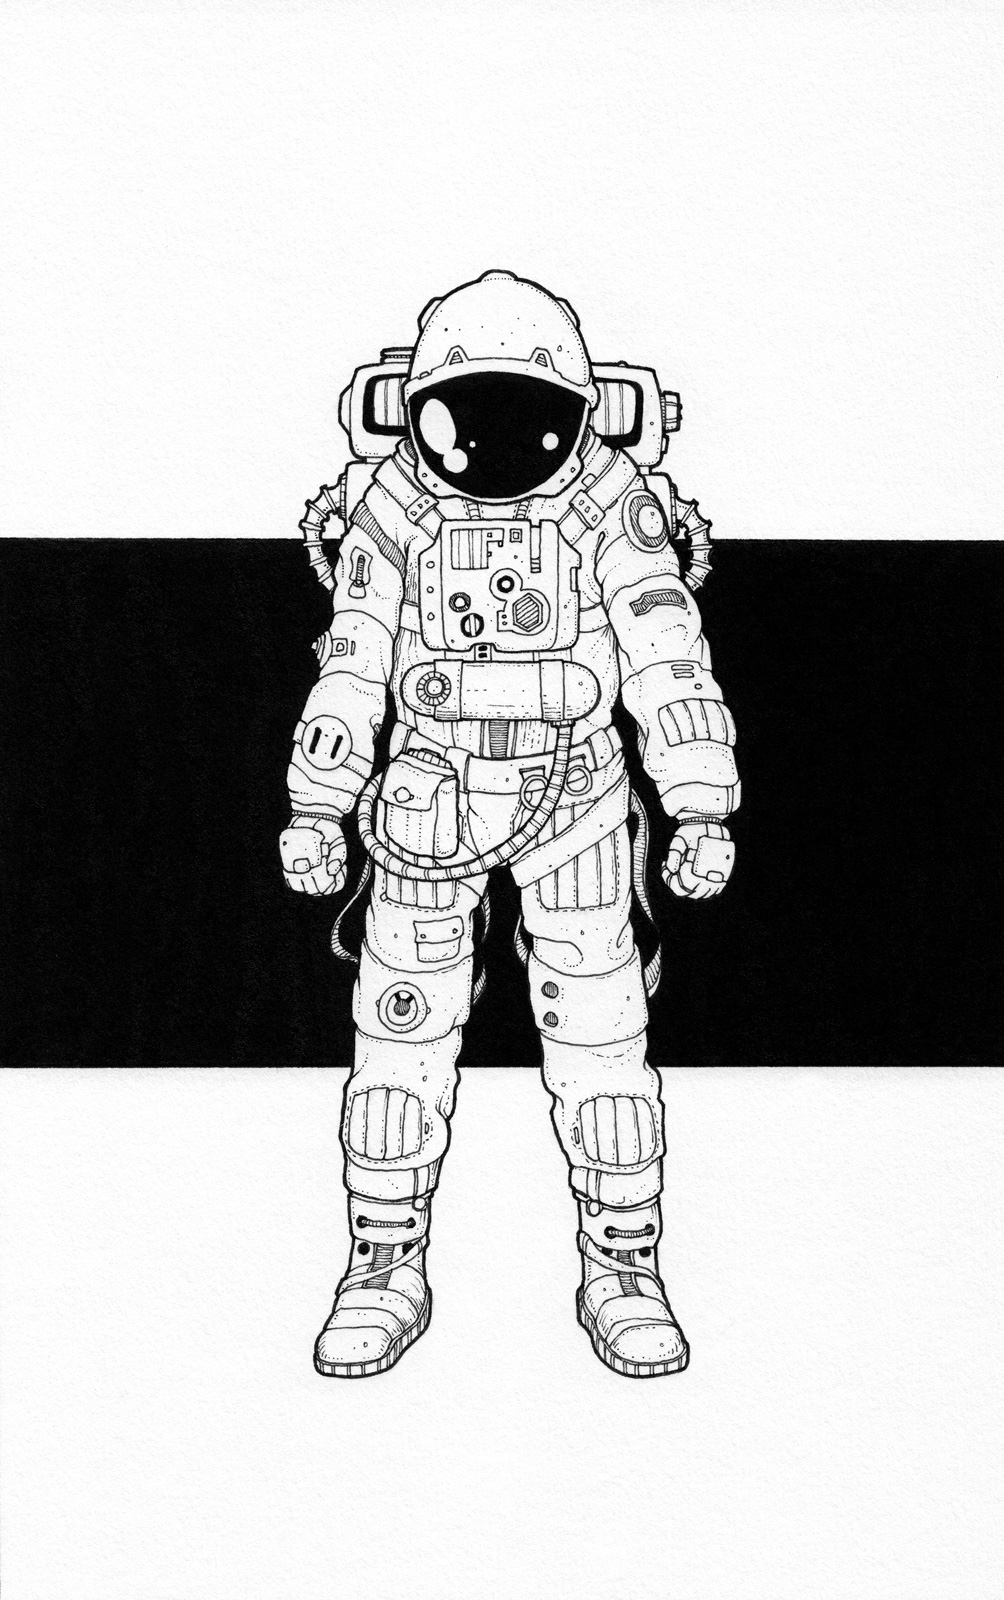 Impressive Wallpaper - X 3141791321 - - Astronaut Space Suit Drawing